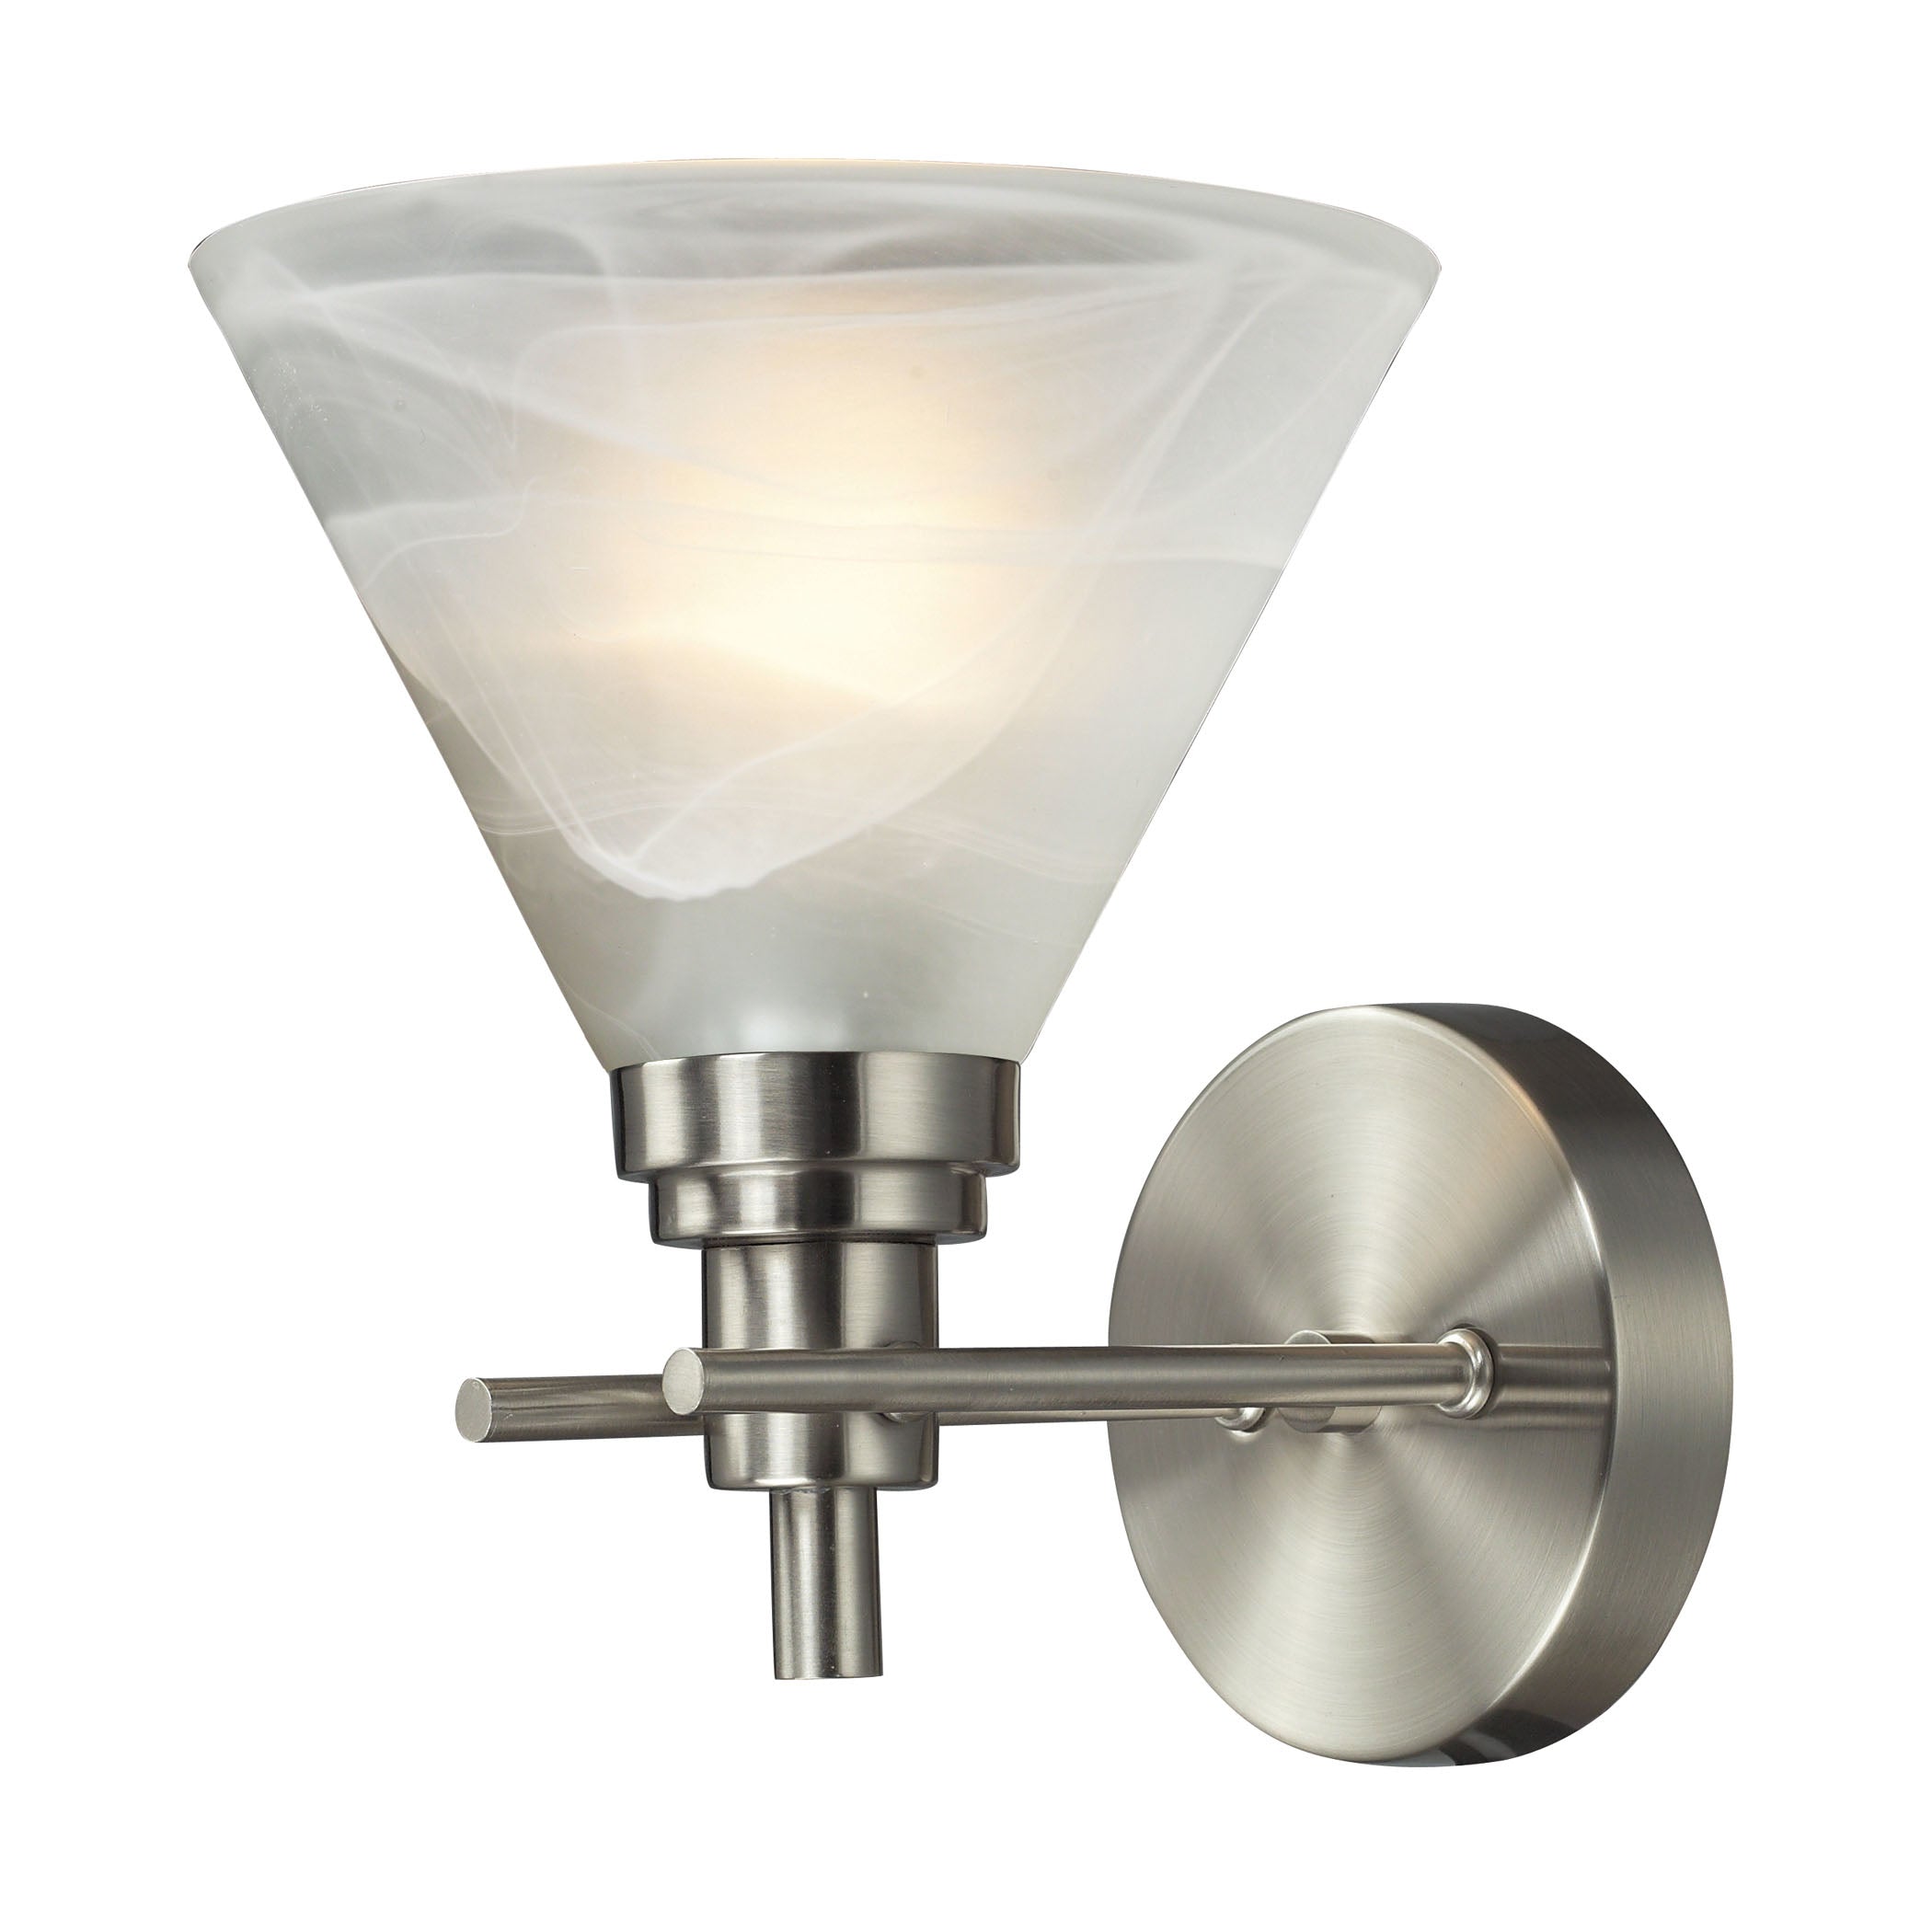 ELK Lighting 11400/1 Pemberton 1-Light Vanity Lamp in Brushed Nickel with White Marbleized Glass